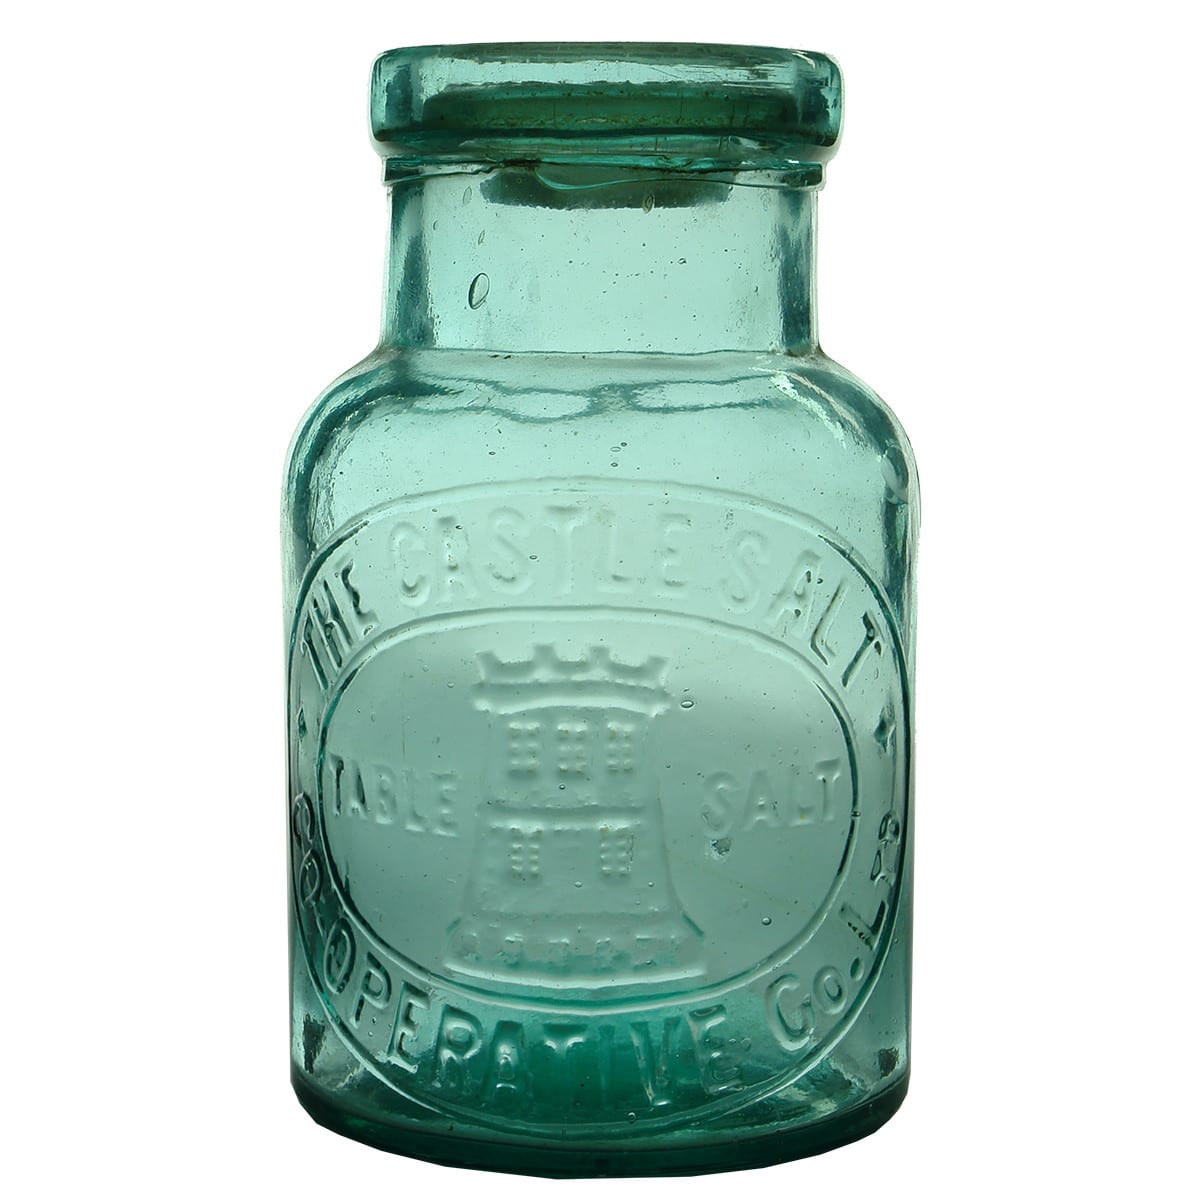 Salt Jar. Castle Salt Co-operative Co. Ltd. Long Neck. FBH. 2 Pound. (South Australia)